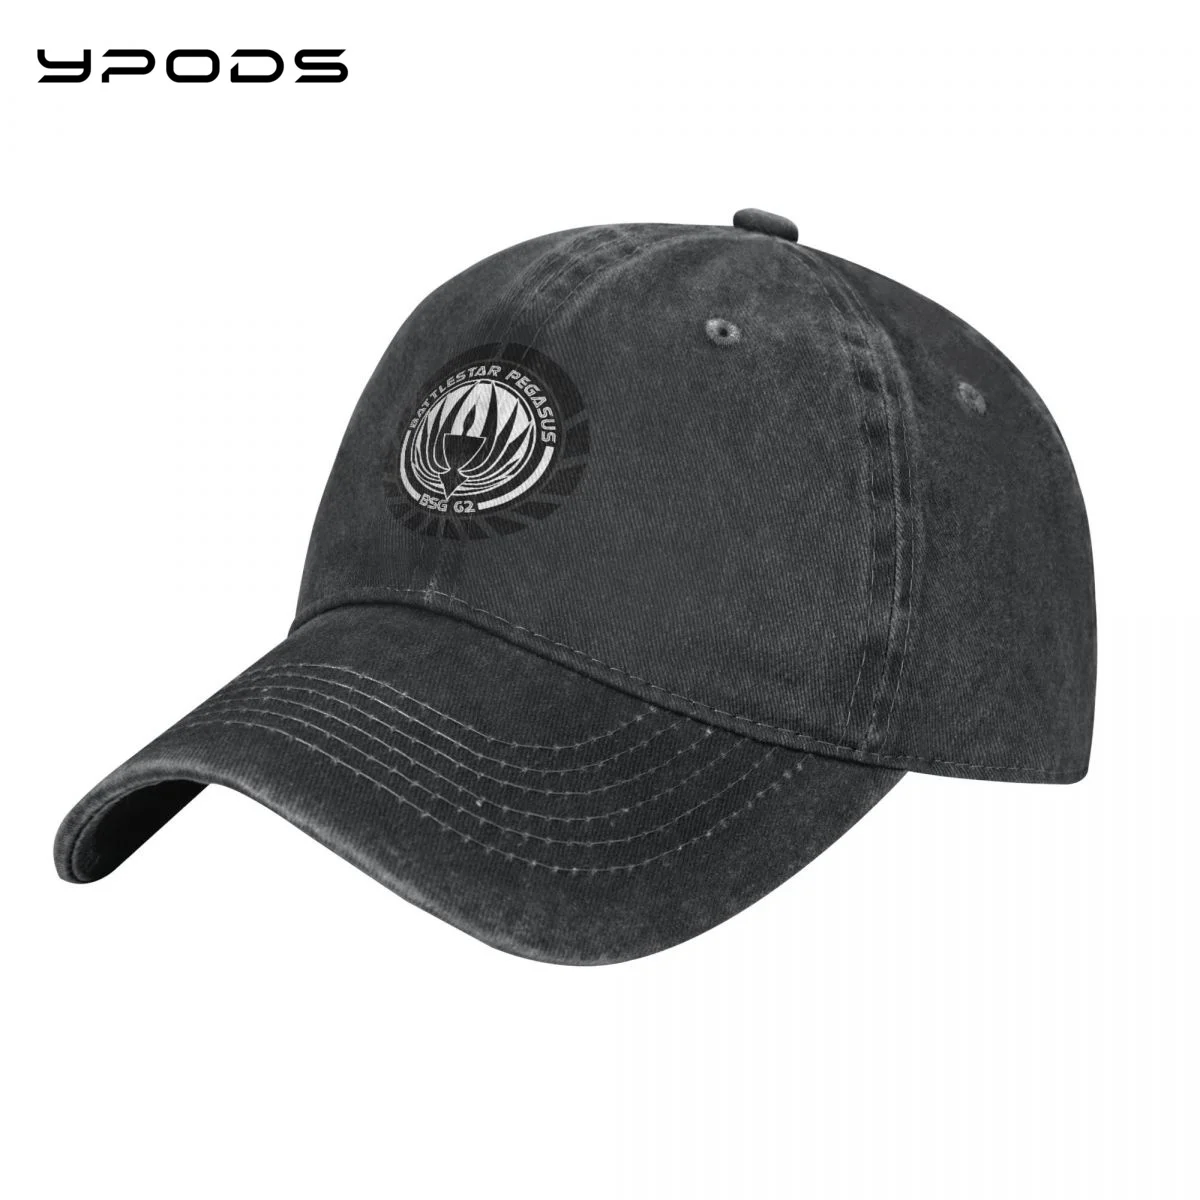 

Galactica PEGASUS BADGE Licensed Adult Heather Baseball Caps for Men Women Vintage Washed Cotton Dad Hats Print Snapback Cap Hat